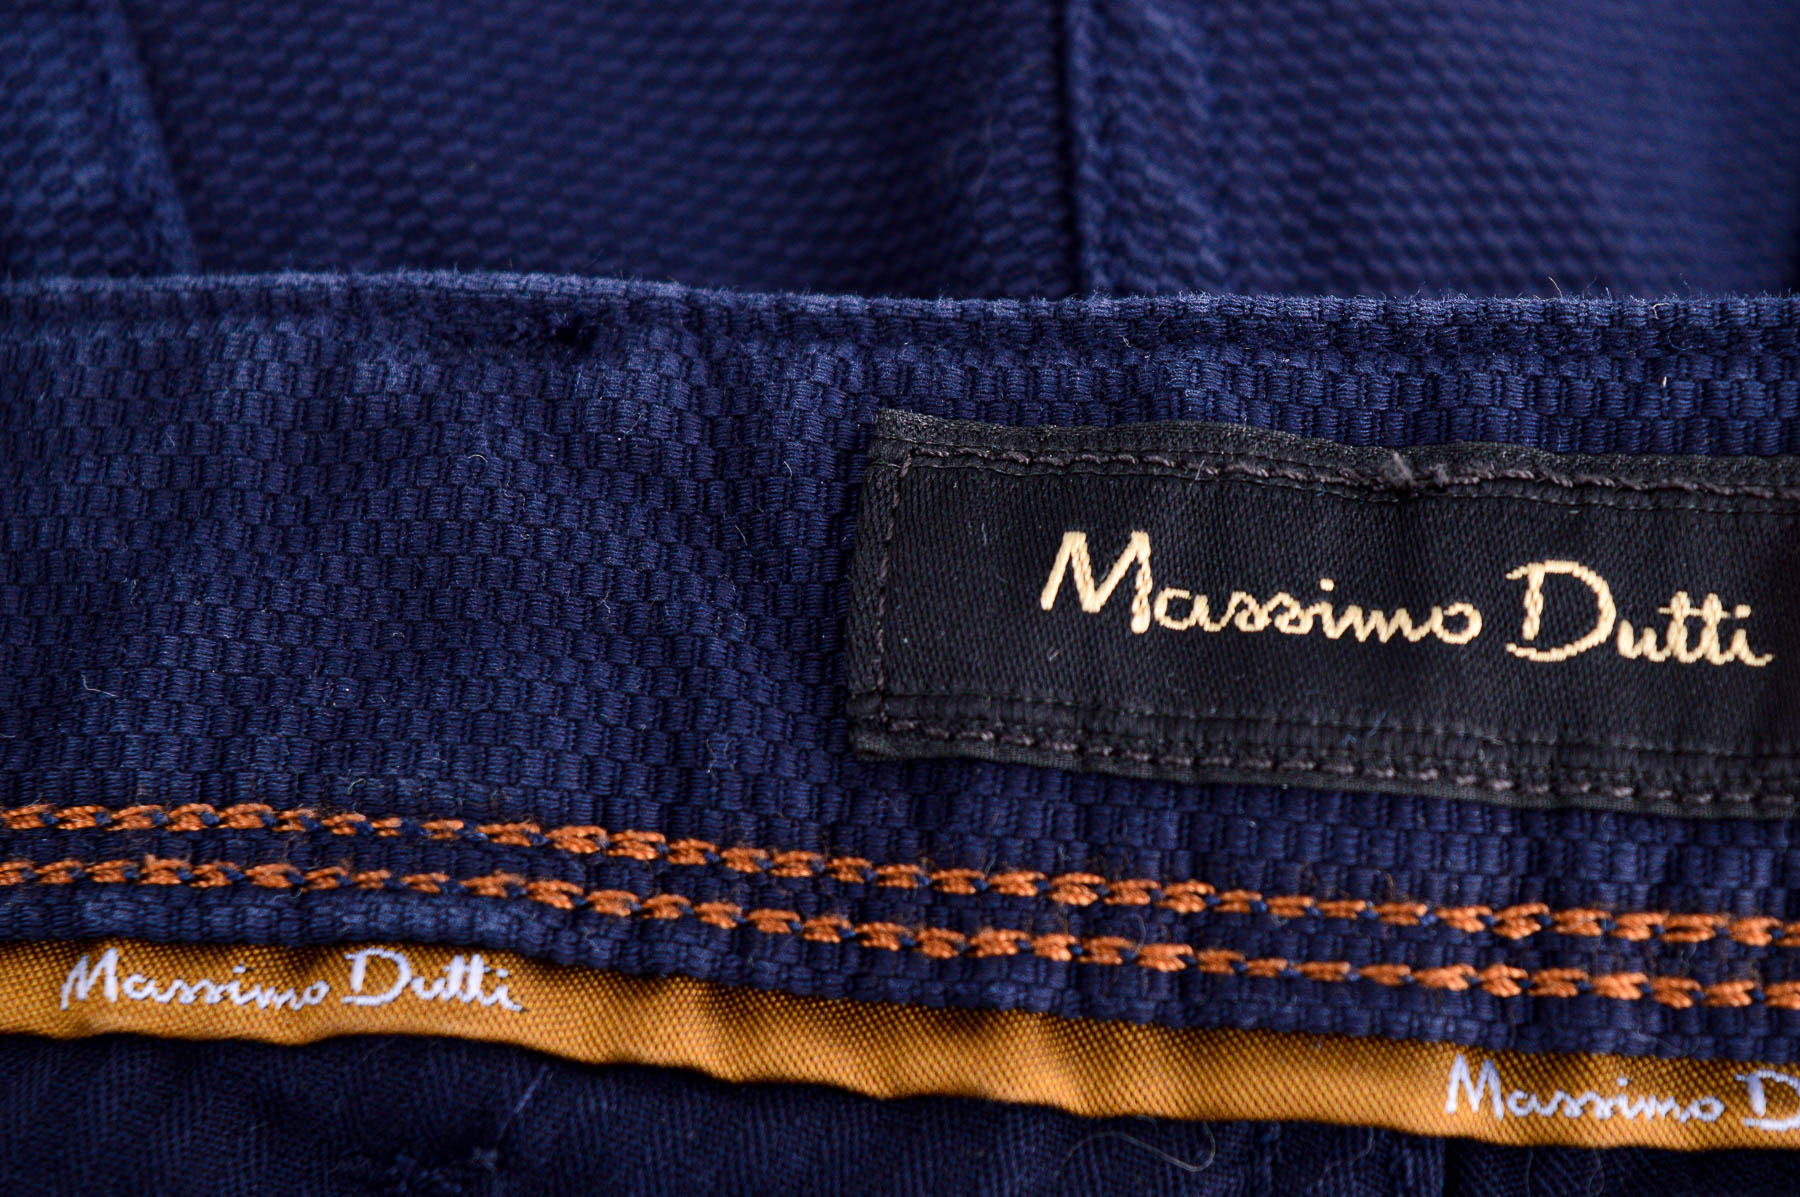 Men's jeans - Massimo Dutti - 2